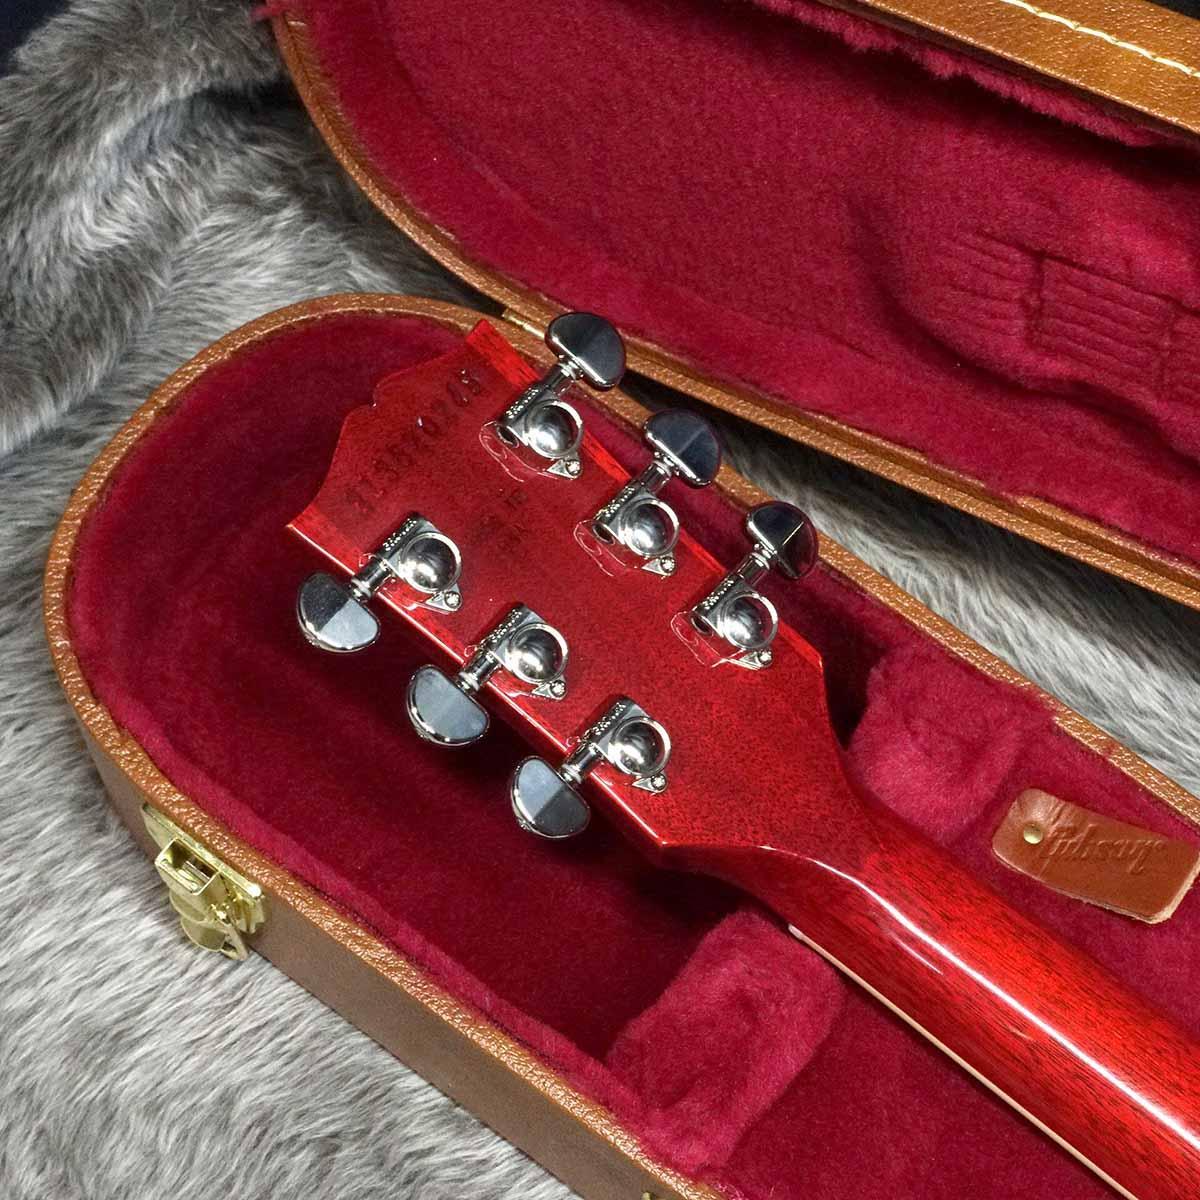 Gibson Les Paul Standard 60s Unburst【セール開催中!!】（新品/送料